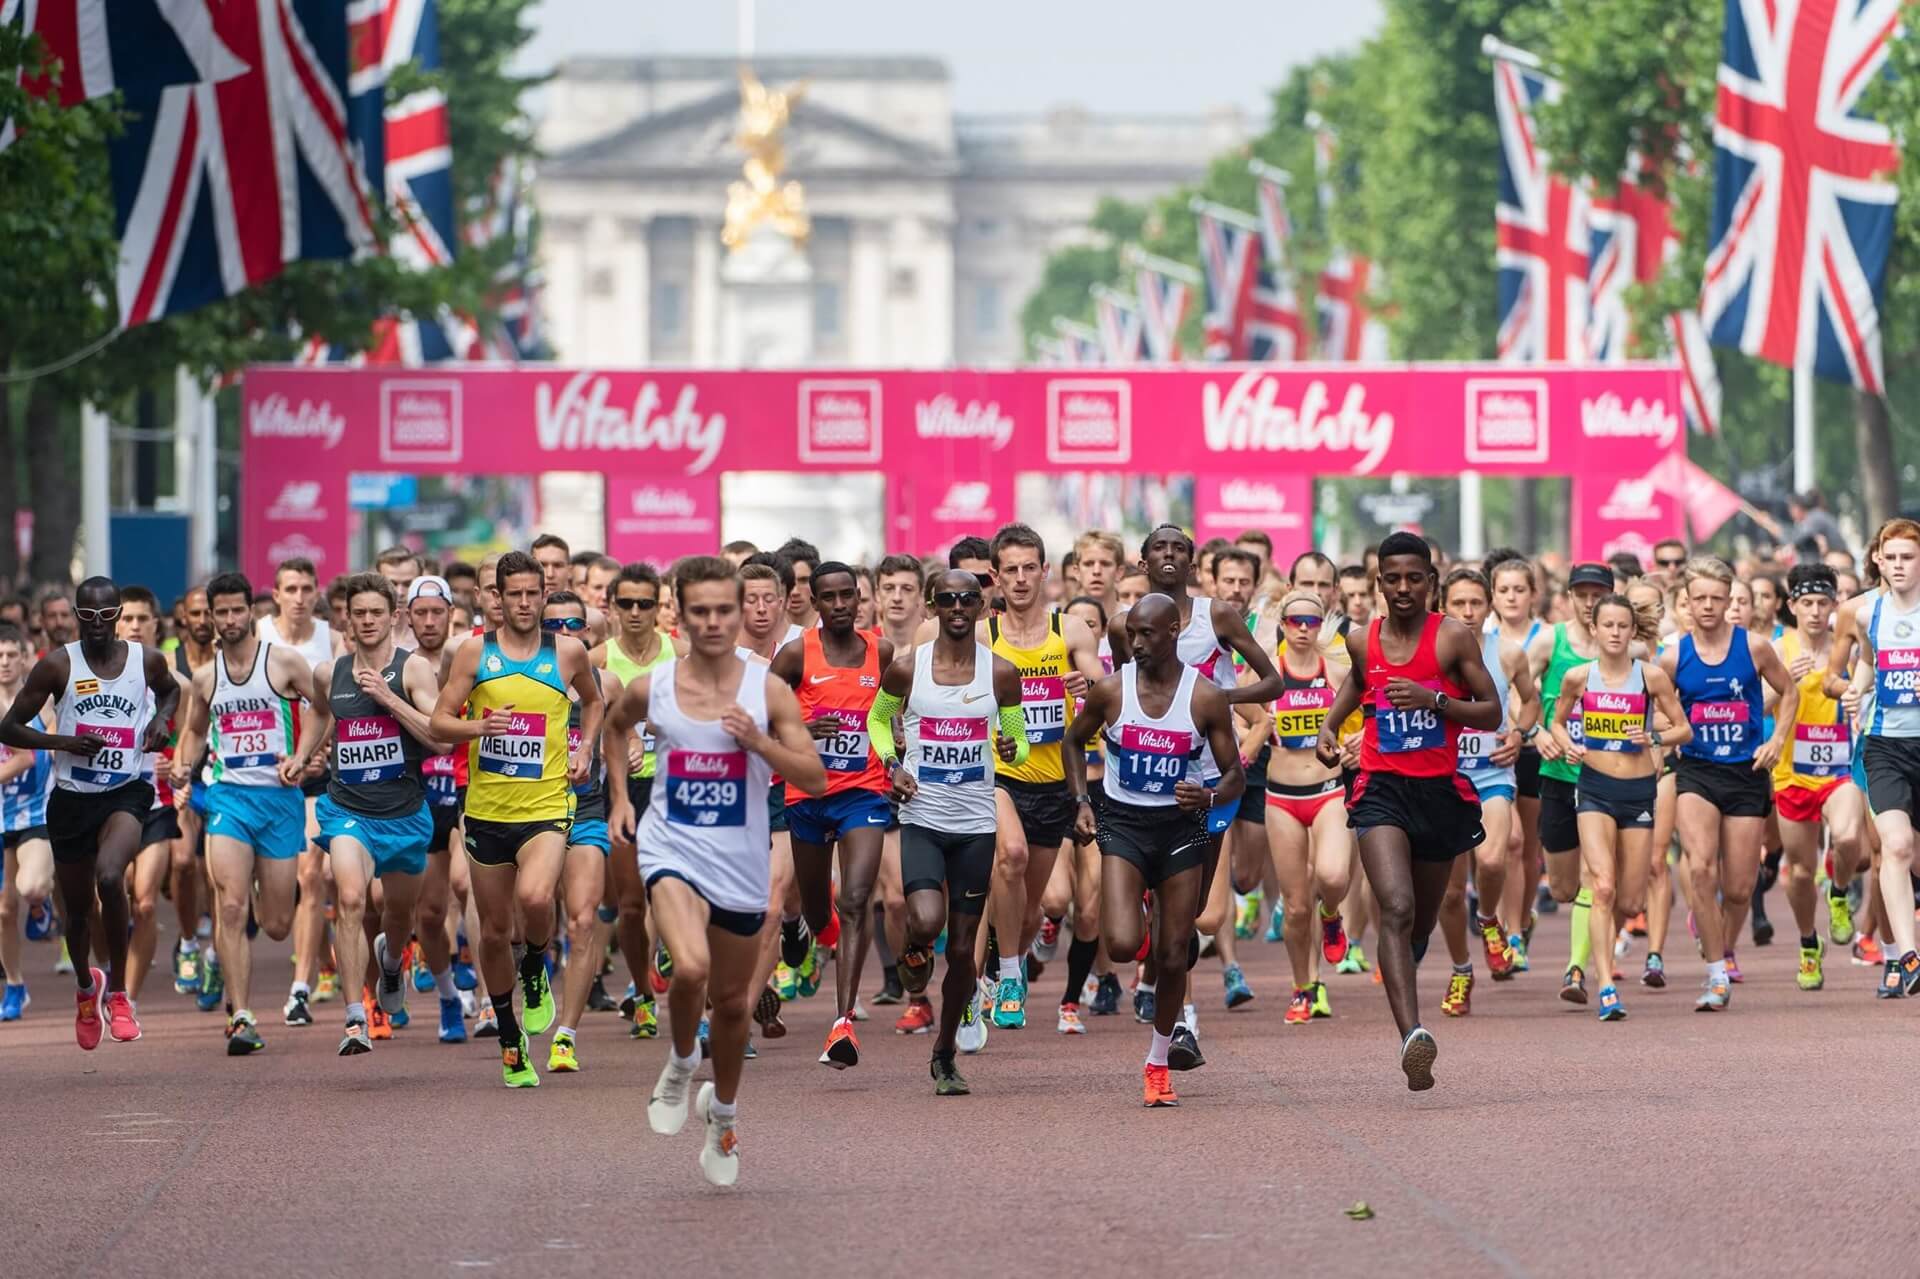 elite athletes including Mo Farah taking off from the Vitality London 10k Start Line